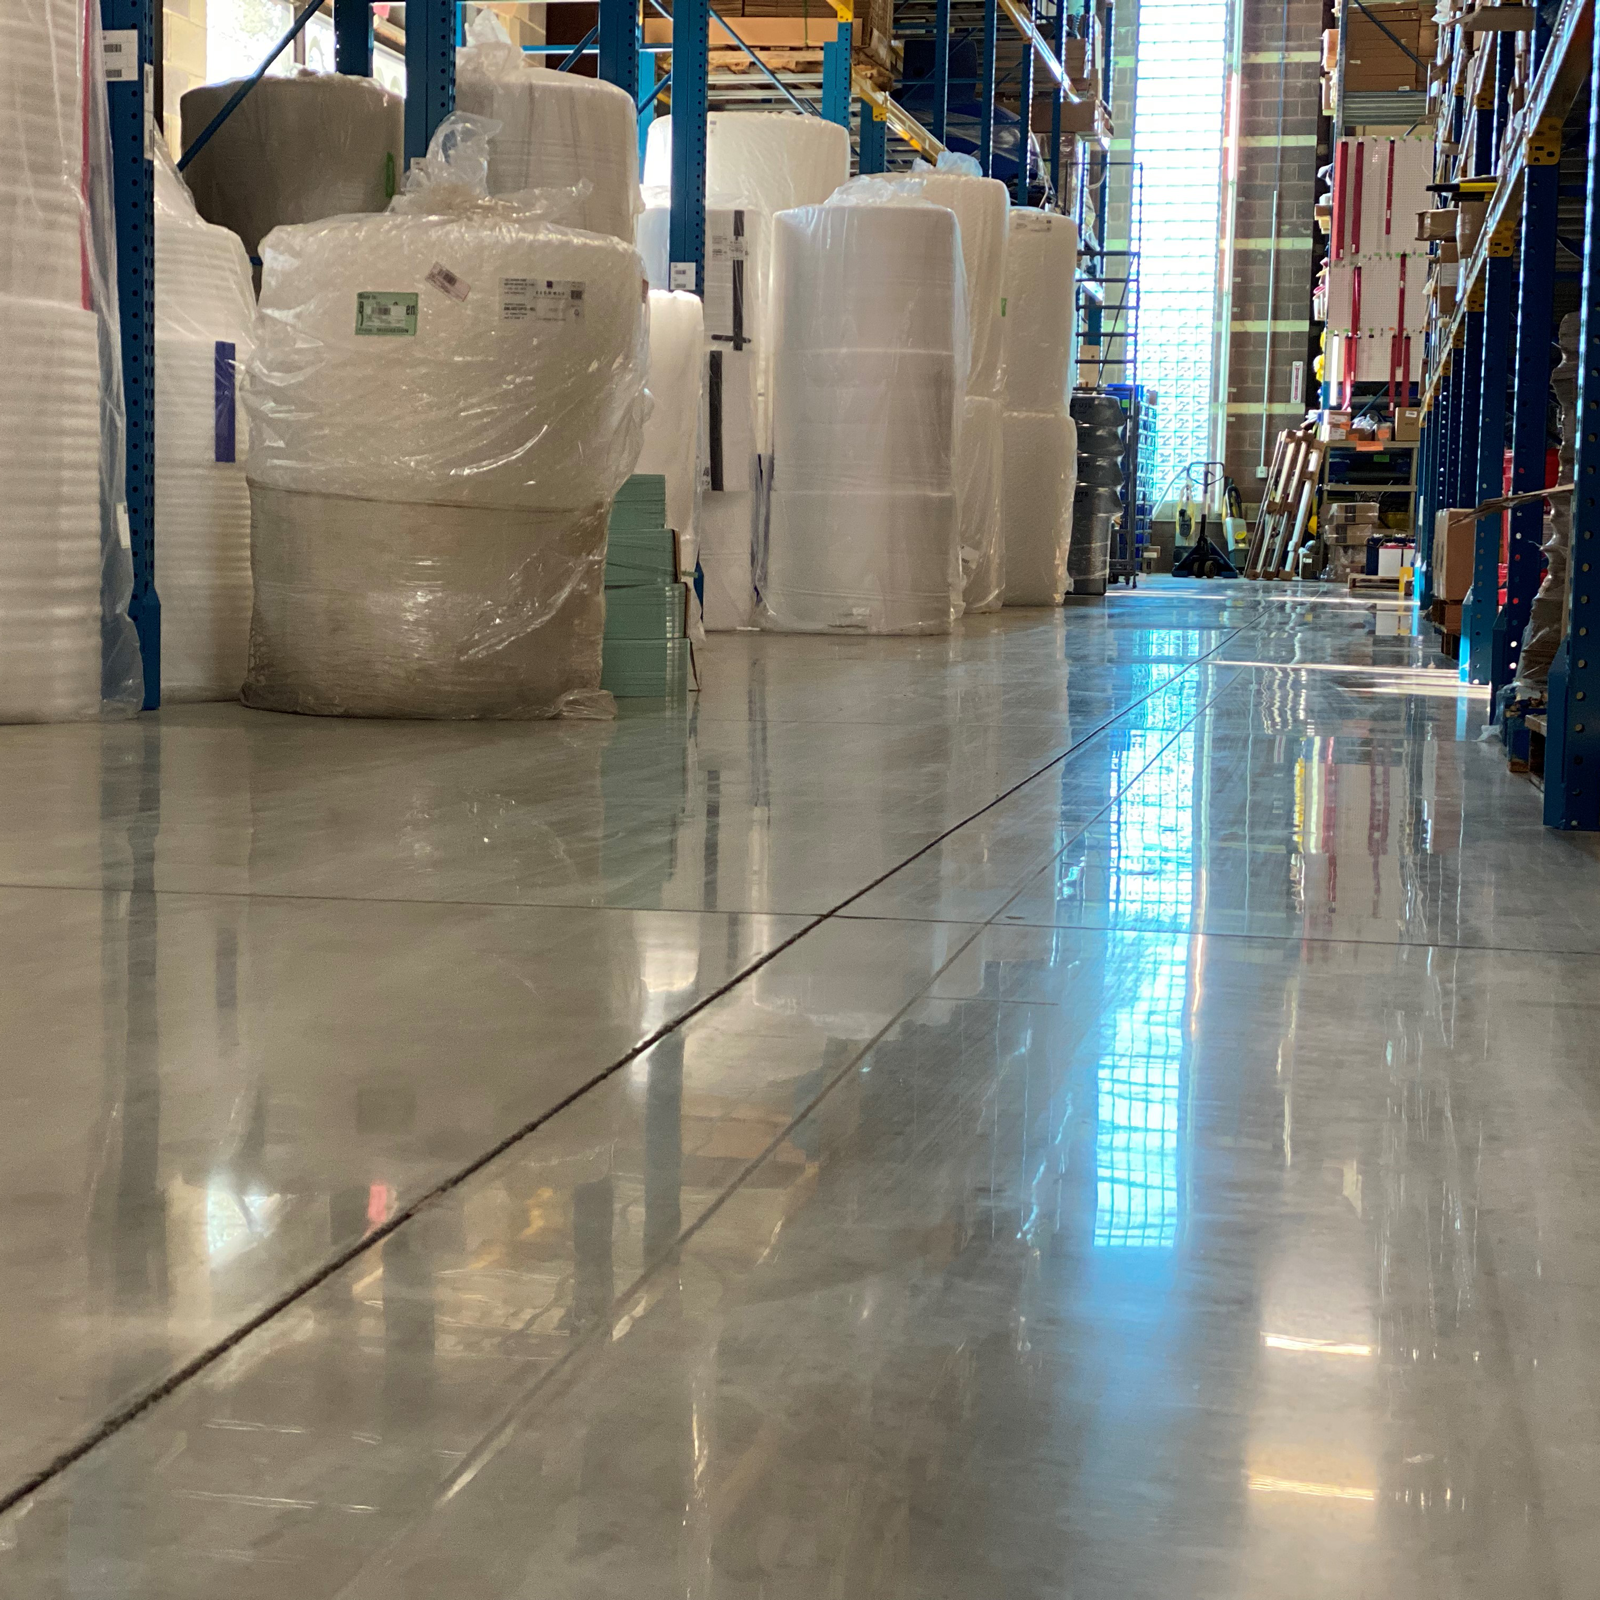 Shiney Polished Concrete at warehouse in Ohio